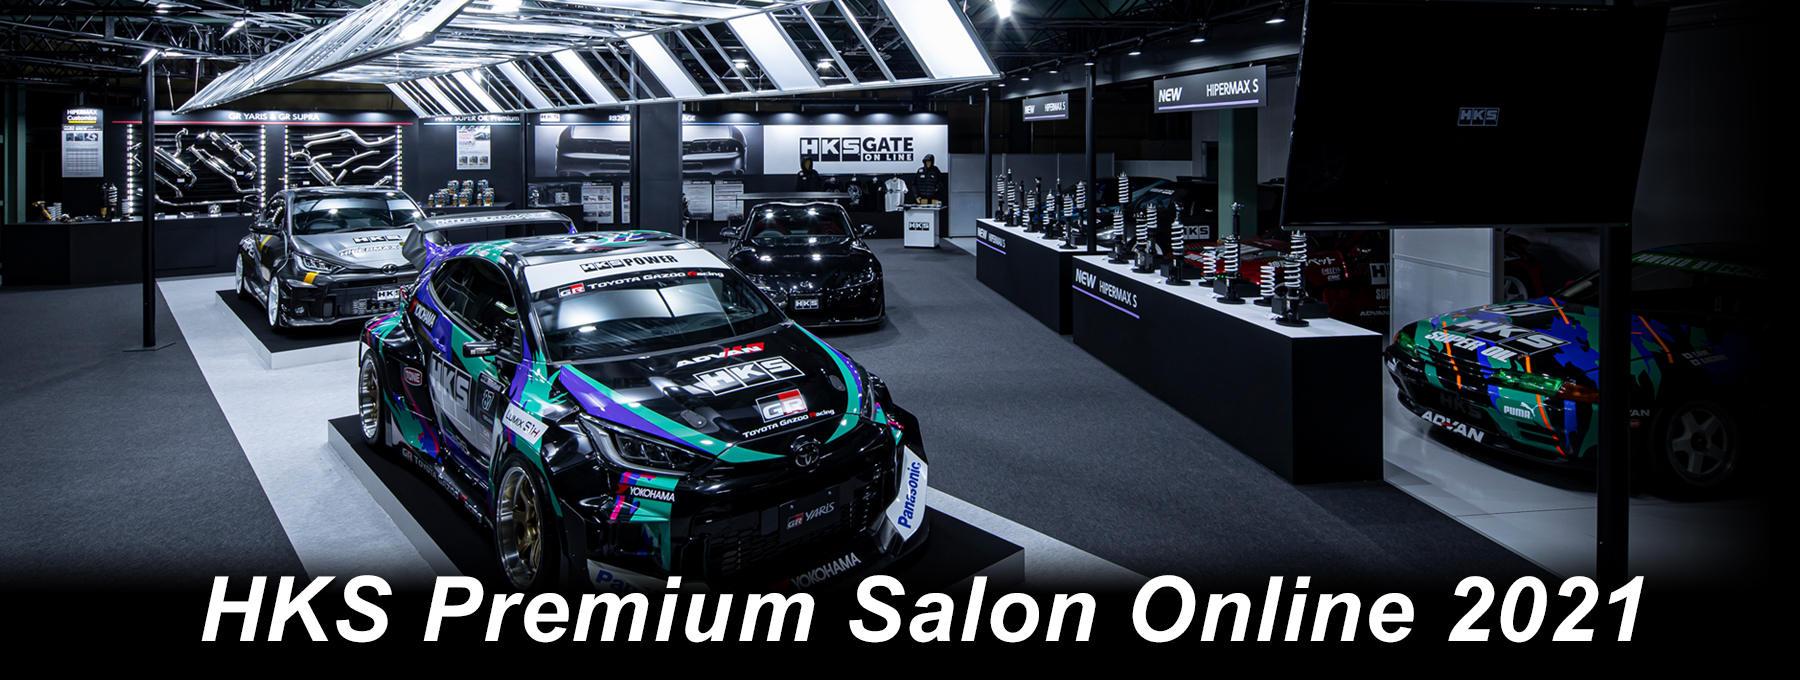 Premium Salon Online 2021